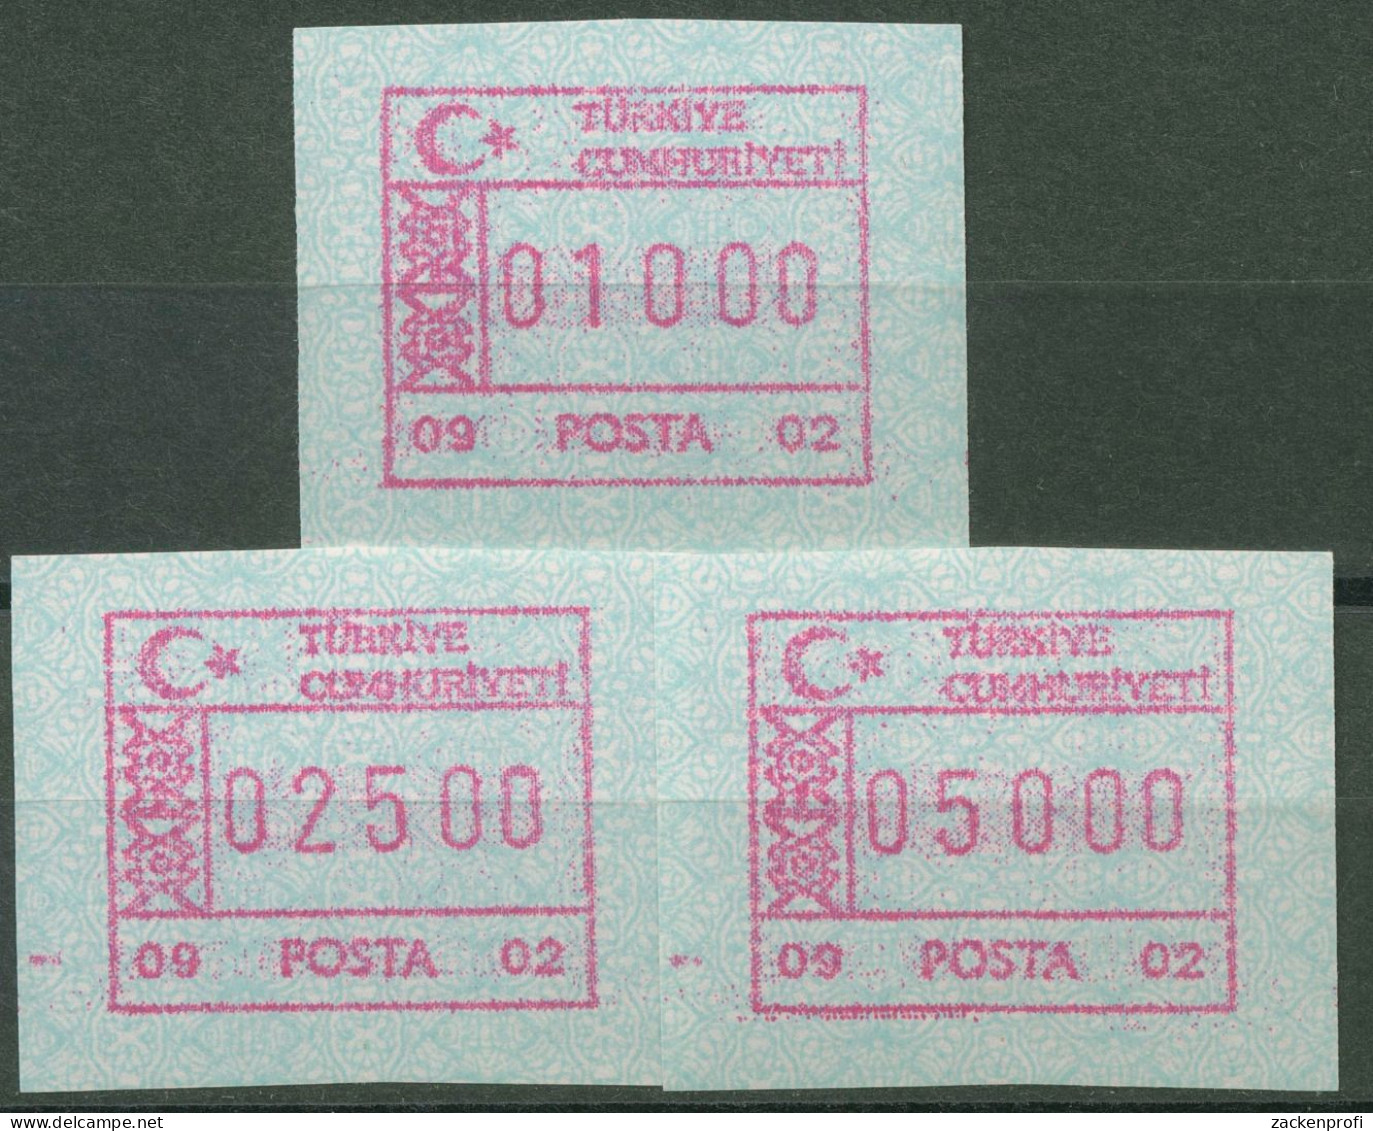 Türkei ATM 1992 Ornamente Automat 09 02, Satz 3 Werte ATM 2.6 S Postfrisch - Distributeurs